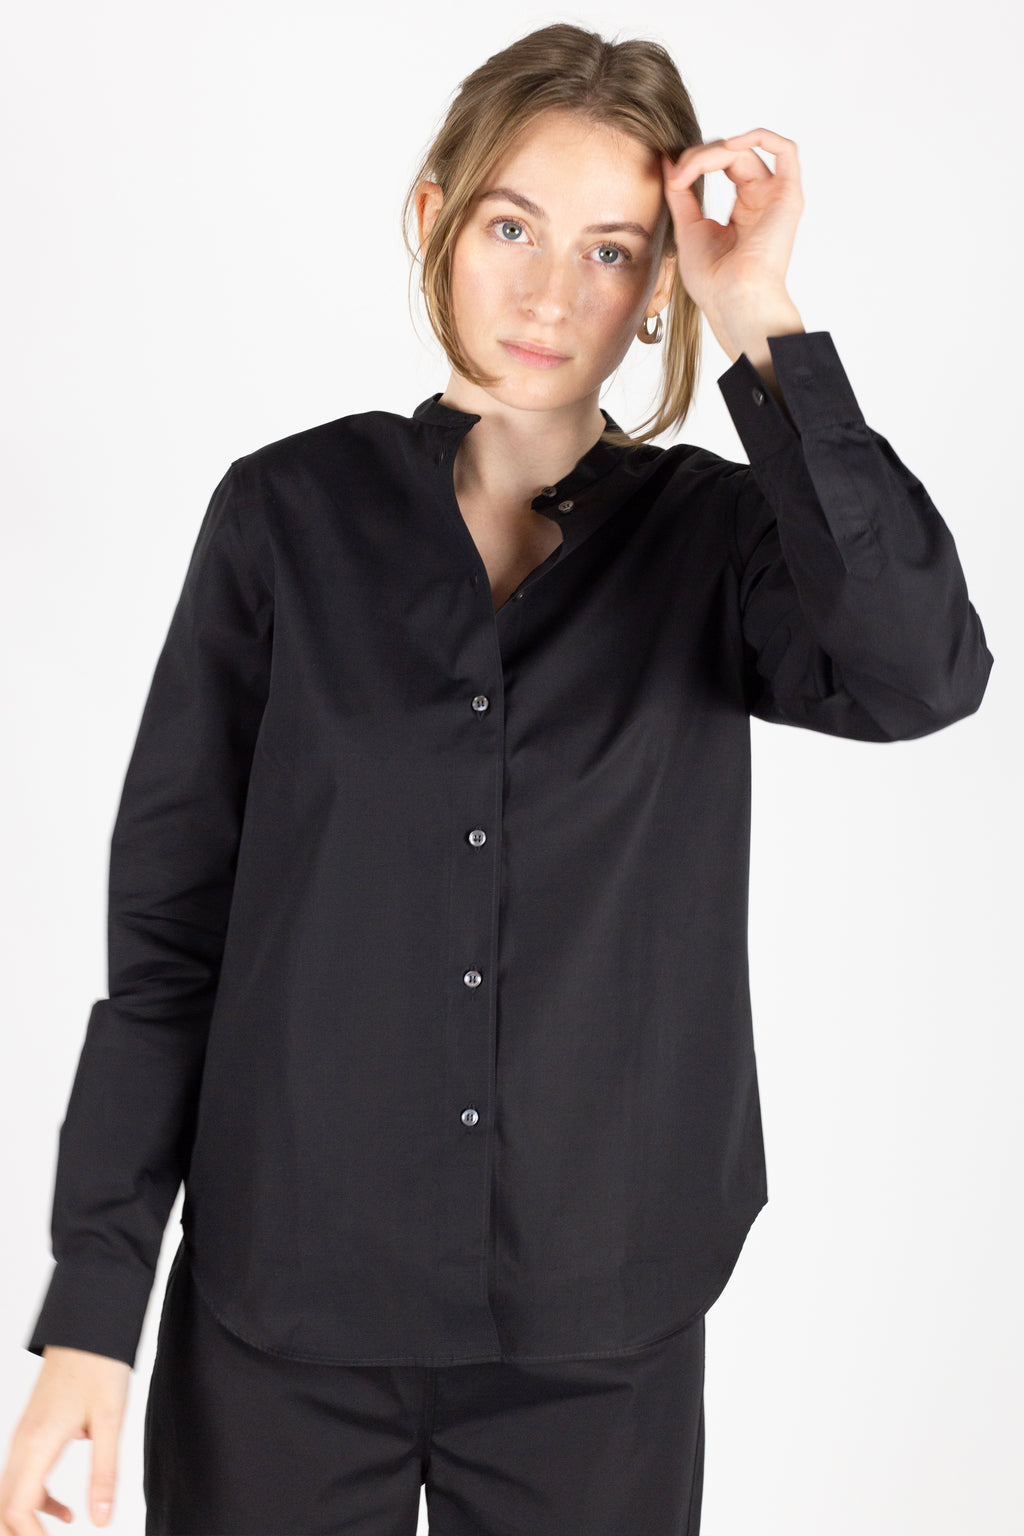 Women's long sleeve cotton poplin shirt black.  